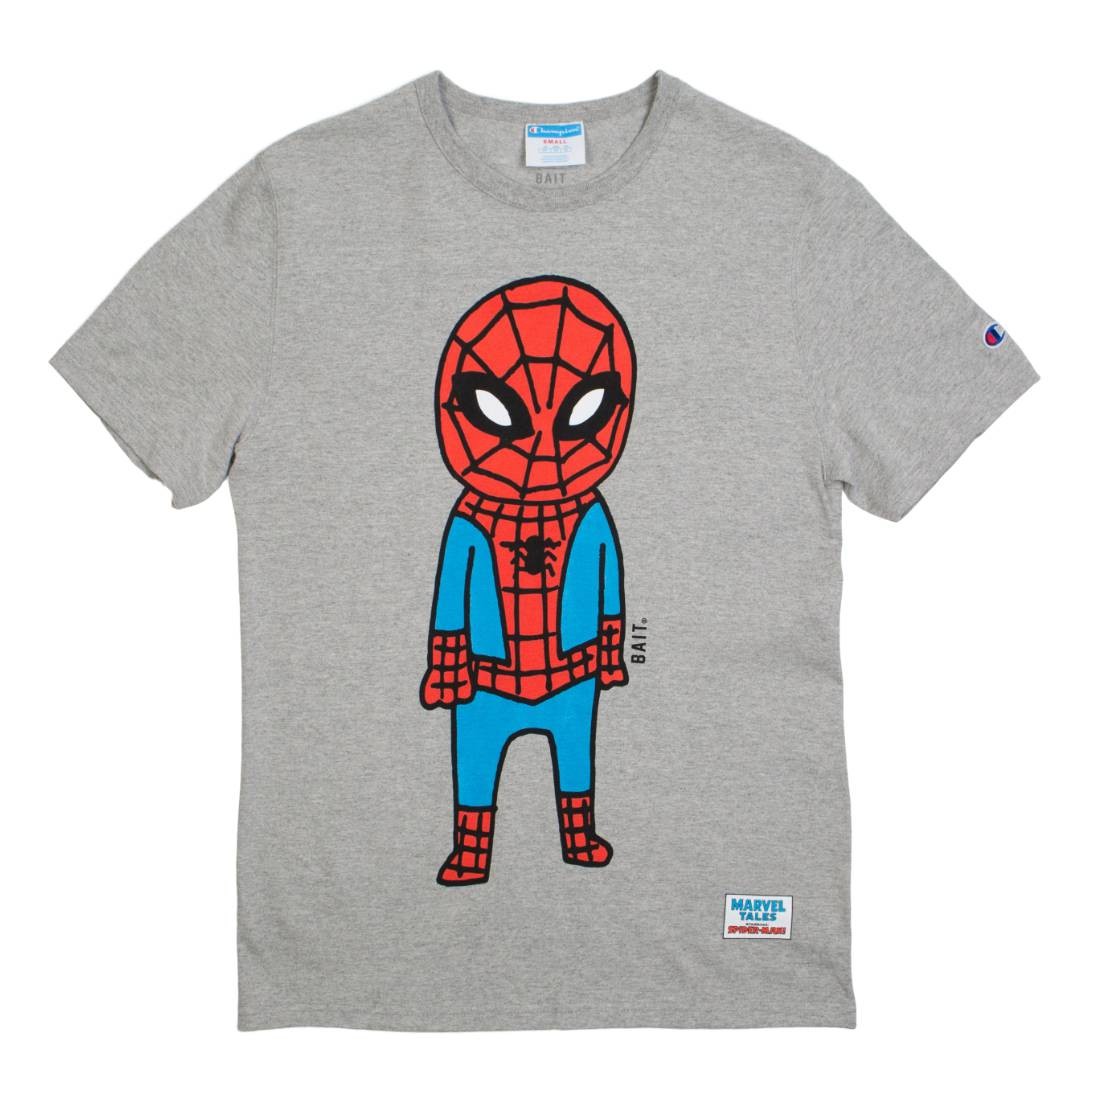 BAIT x Spiderman x Champion Men Spiderman Doodle Tee (gray / oxford)